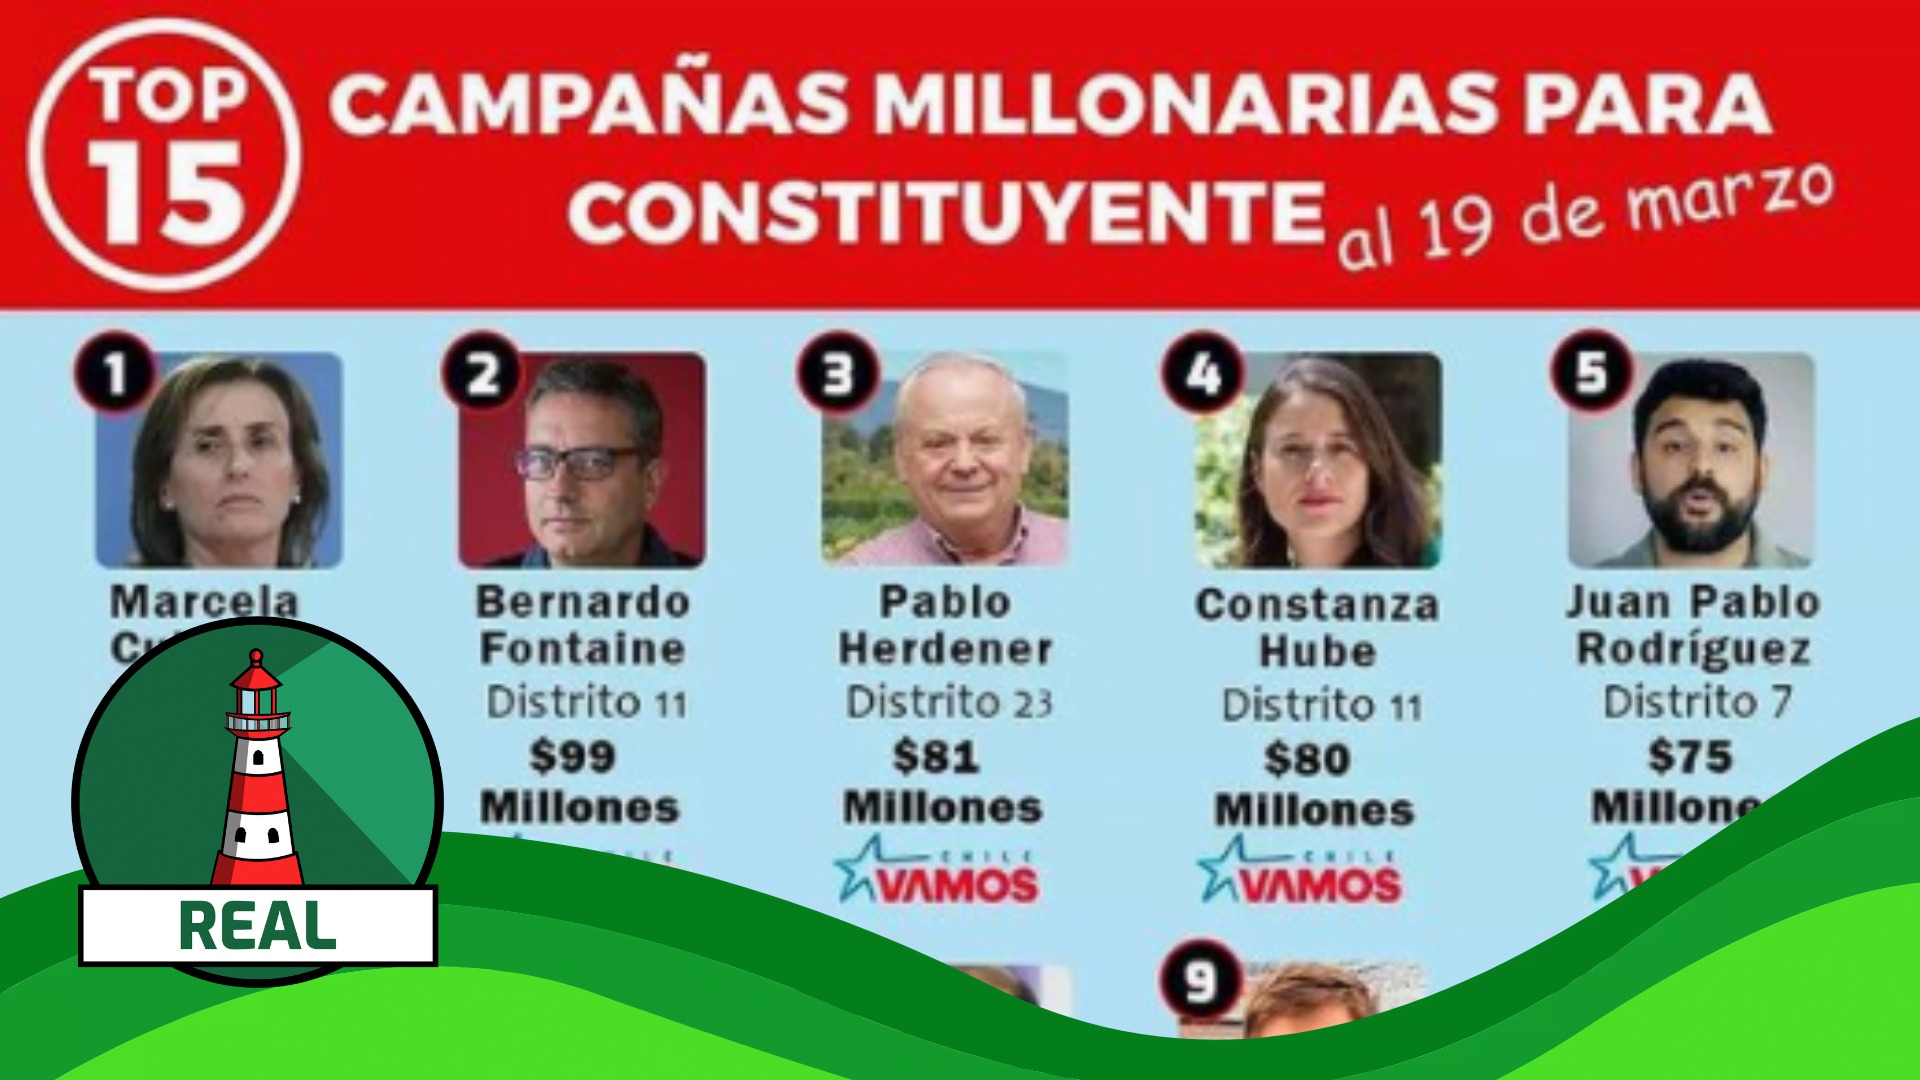 Read more about the article (Imagen) 15 candidatos constituyentes tienen campañas millonarias: #Real